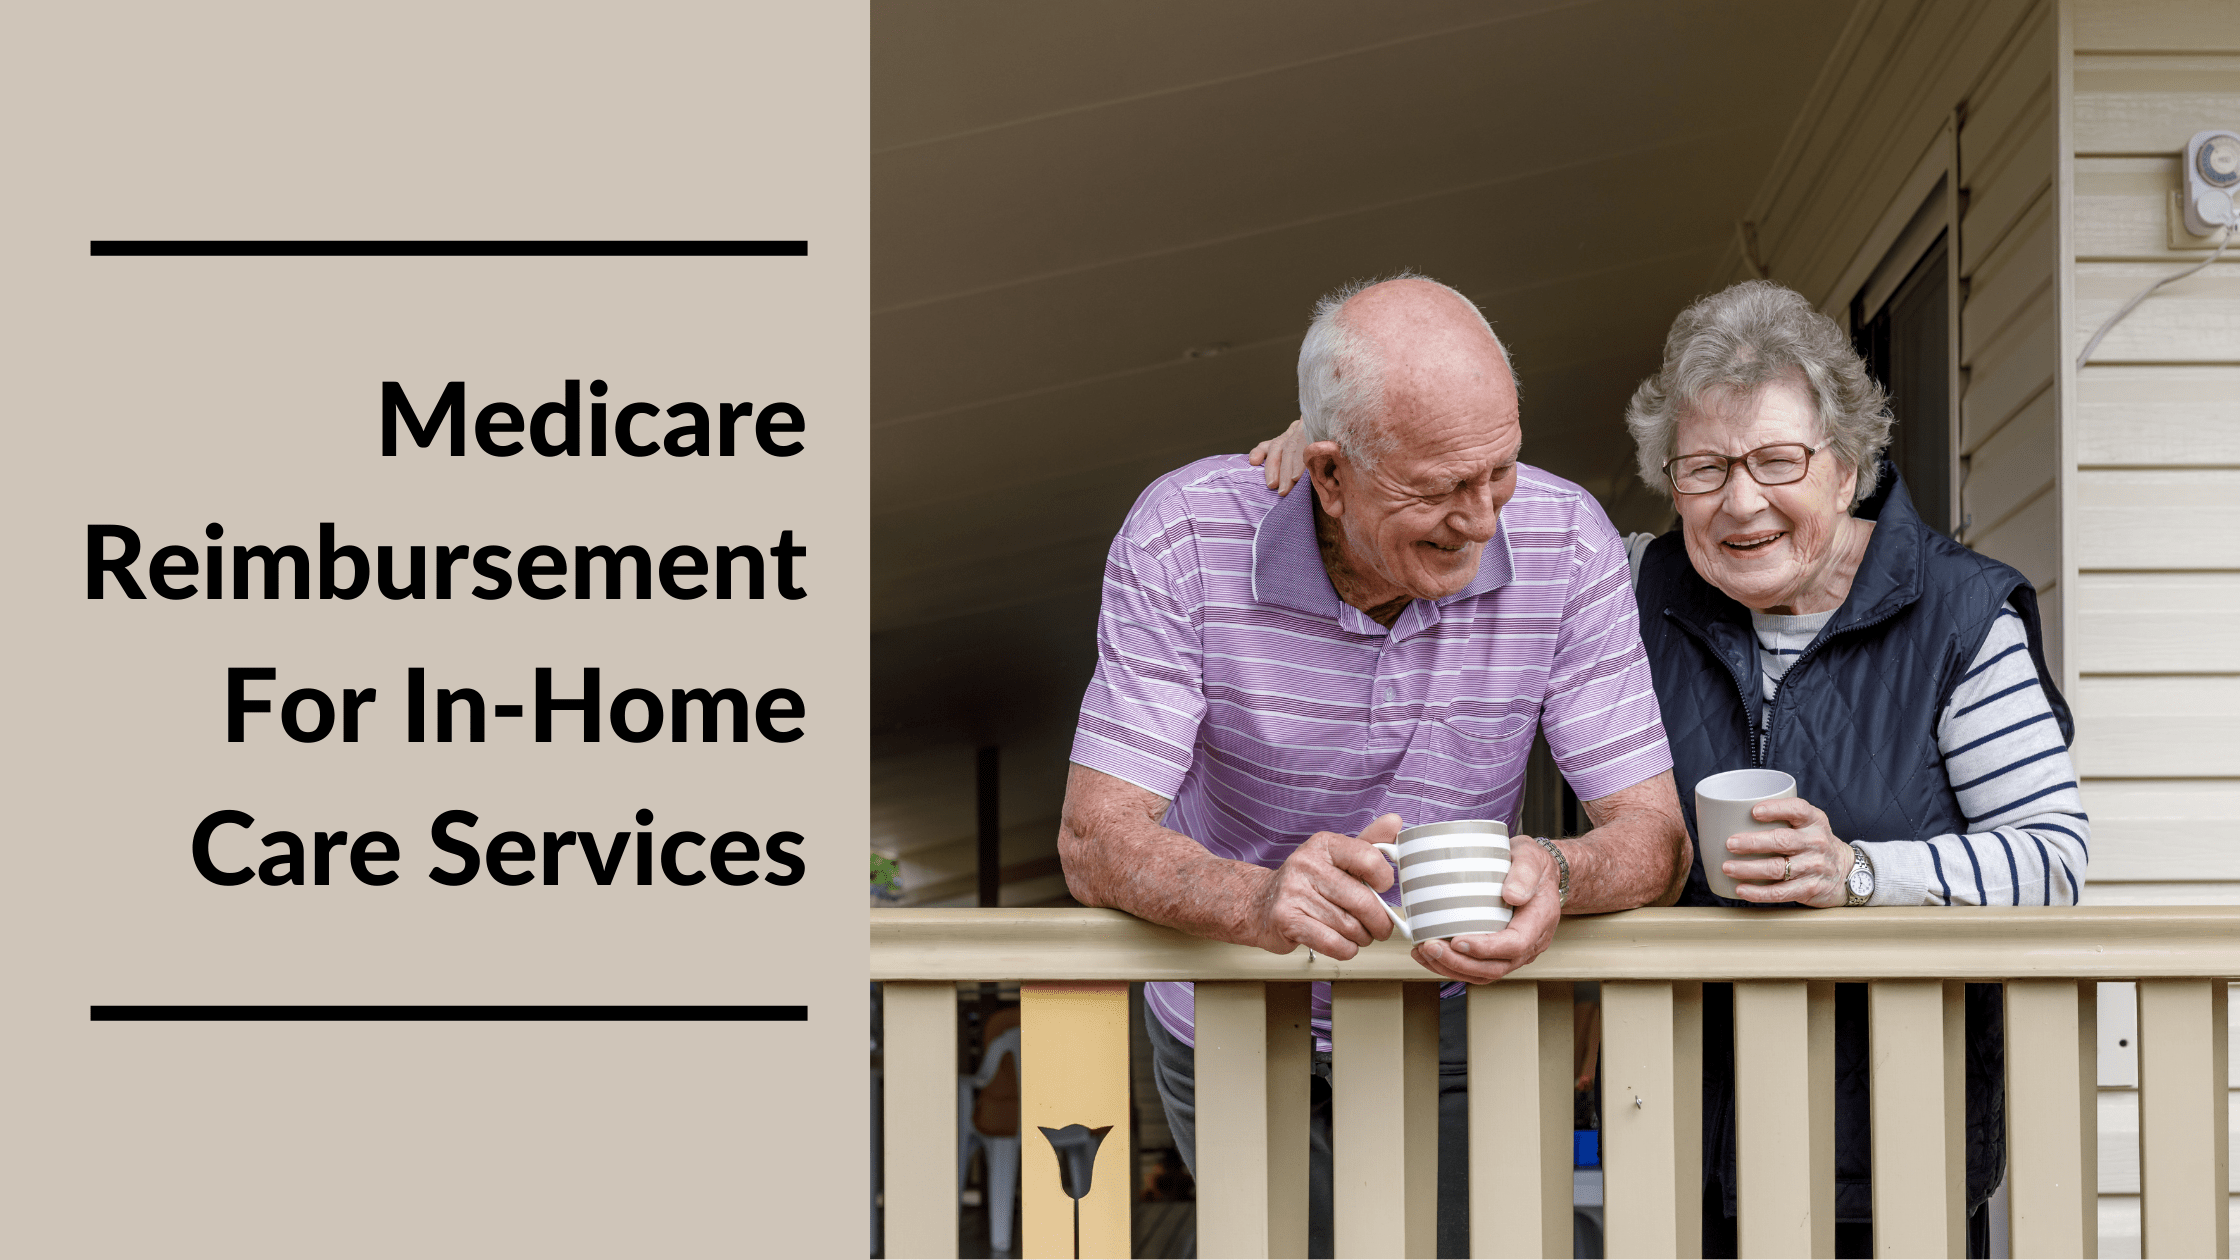 Medicare Reimbursement For Home Care Services Featured Image